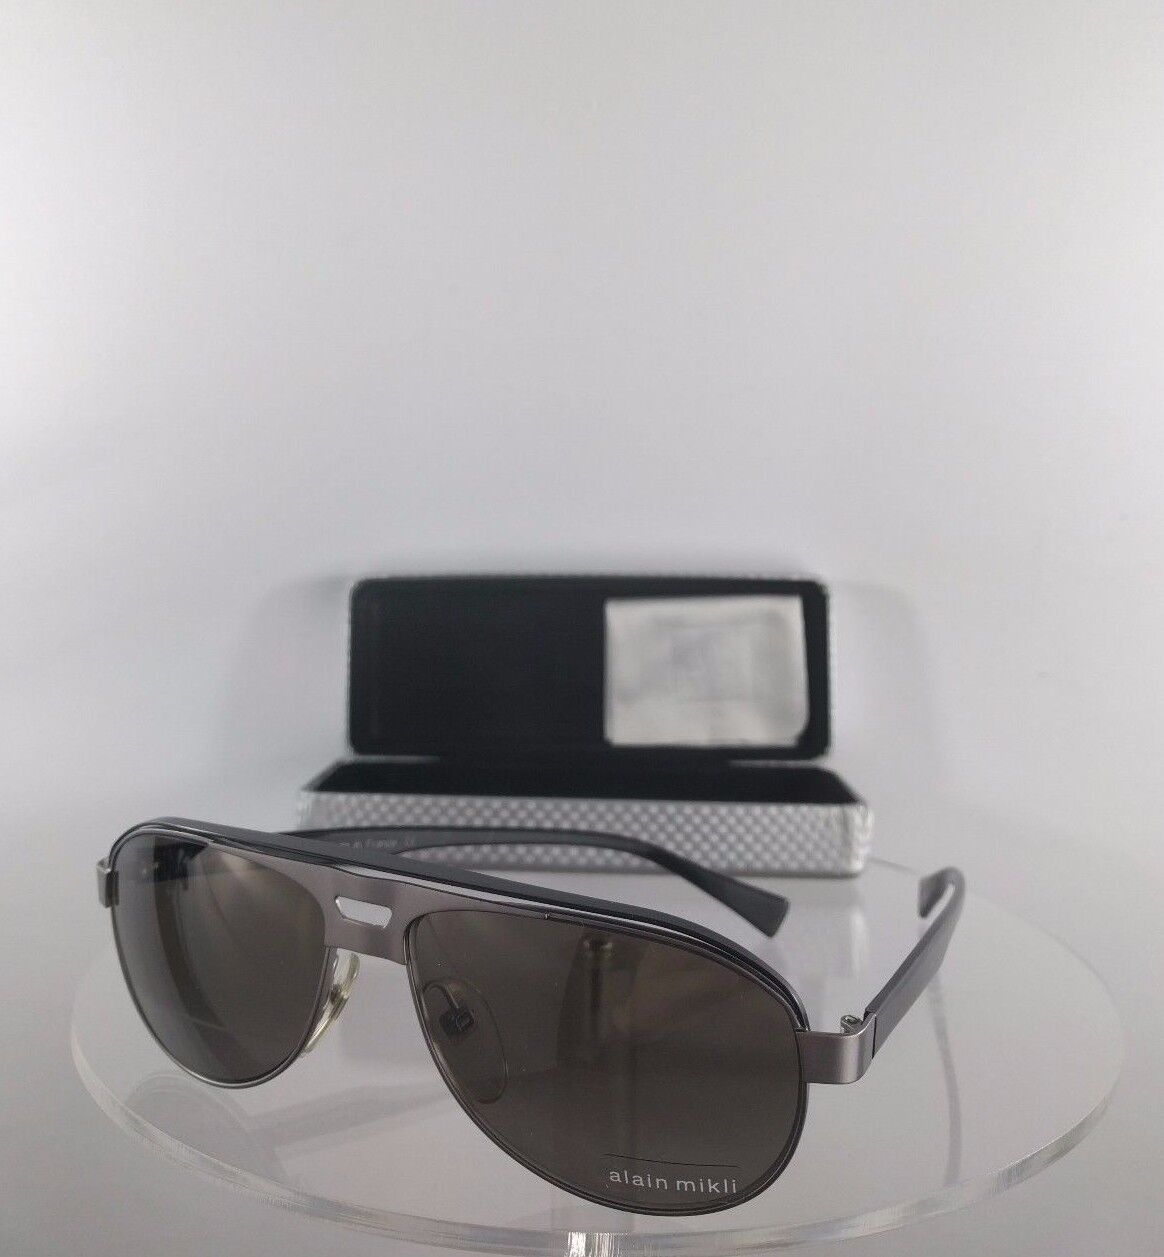 Brand New Authentic Alain Mikli Sunglasses AL 1207 MO41 1520 Aviator Frame